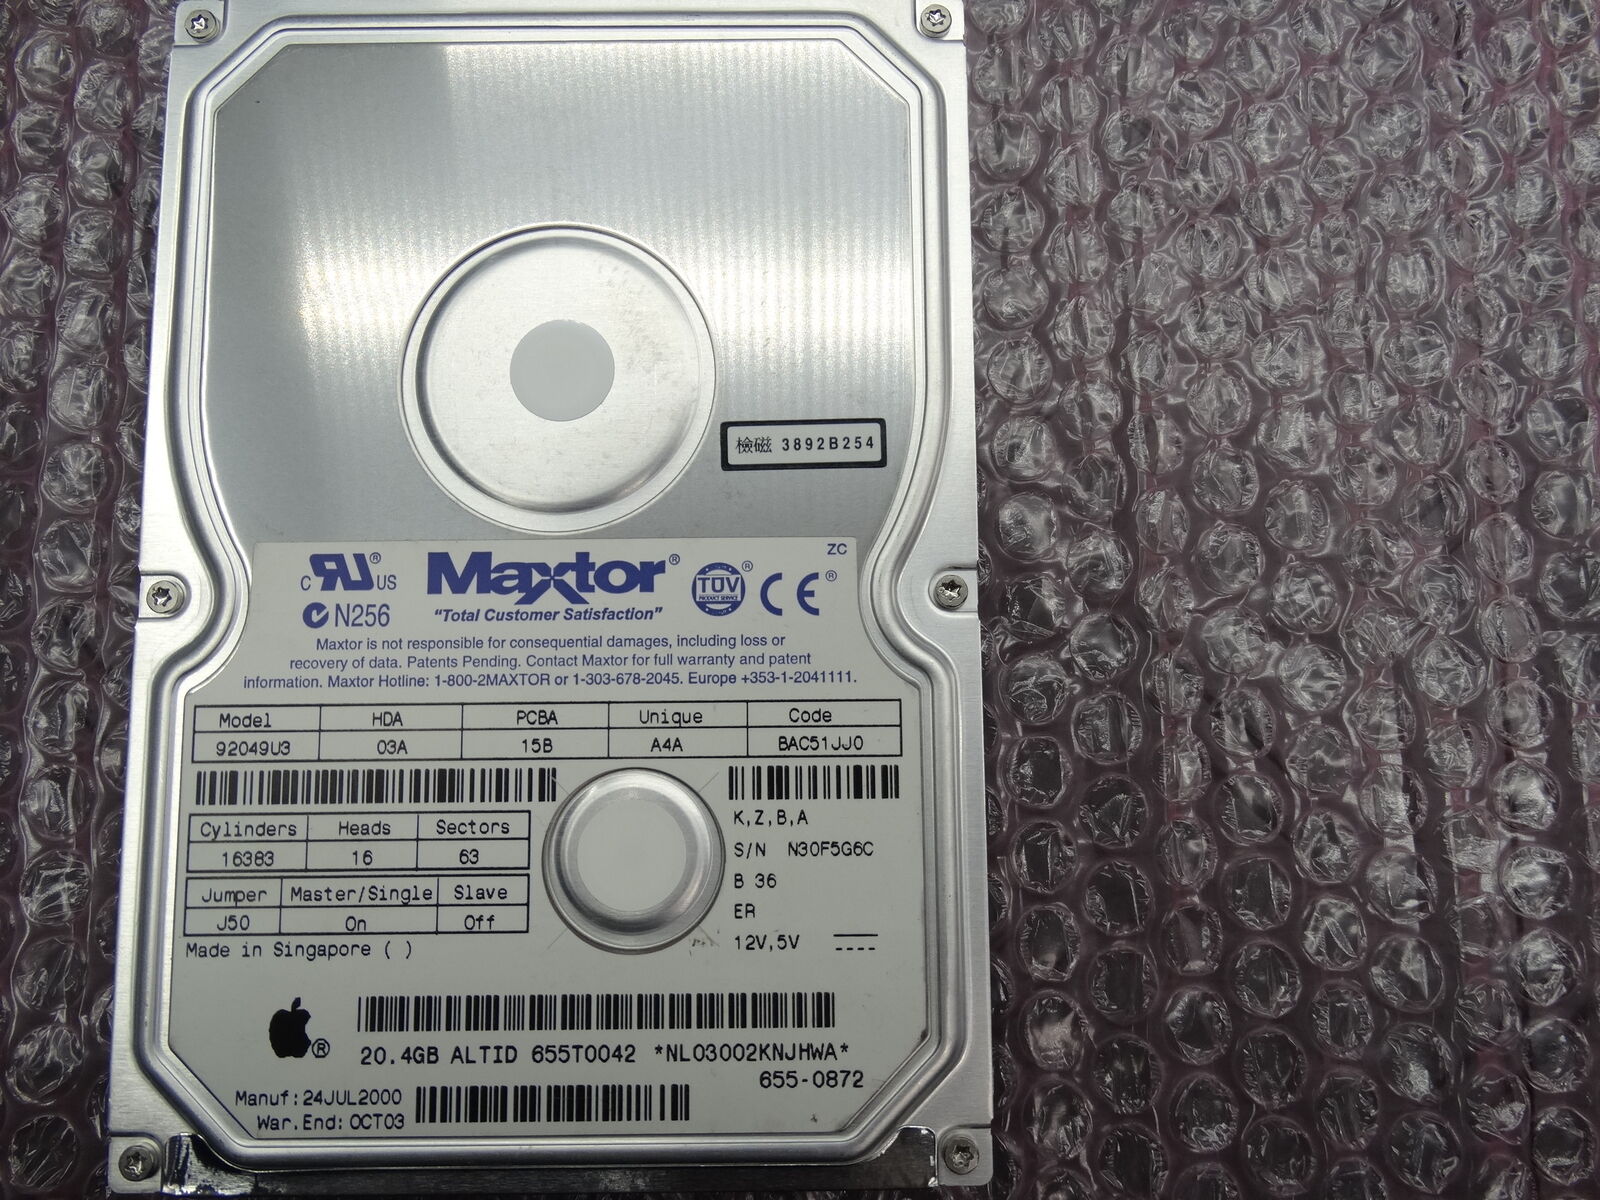 Maxtor 92049U3 20gb 3.5in IDE Hard Drive Tested Works